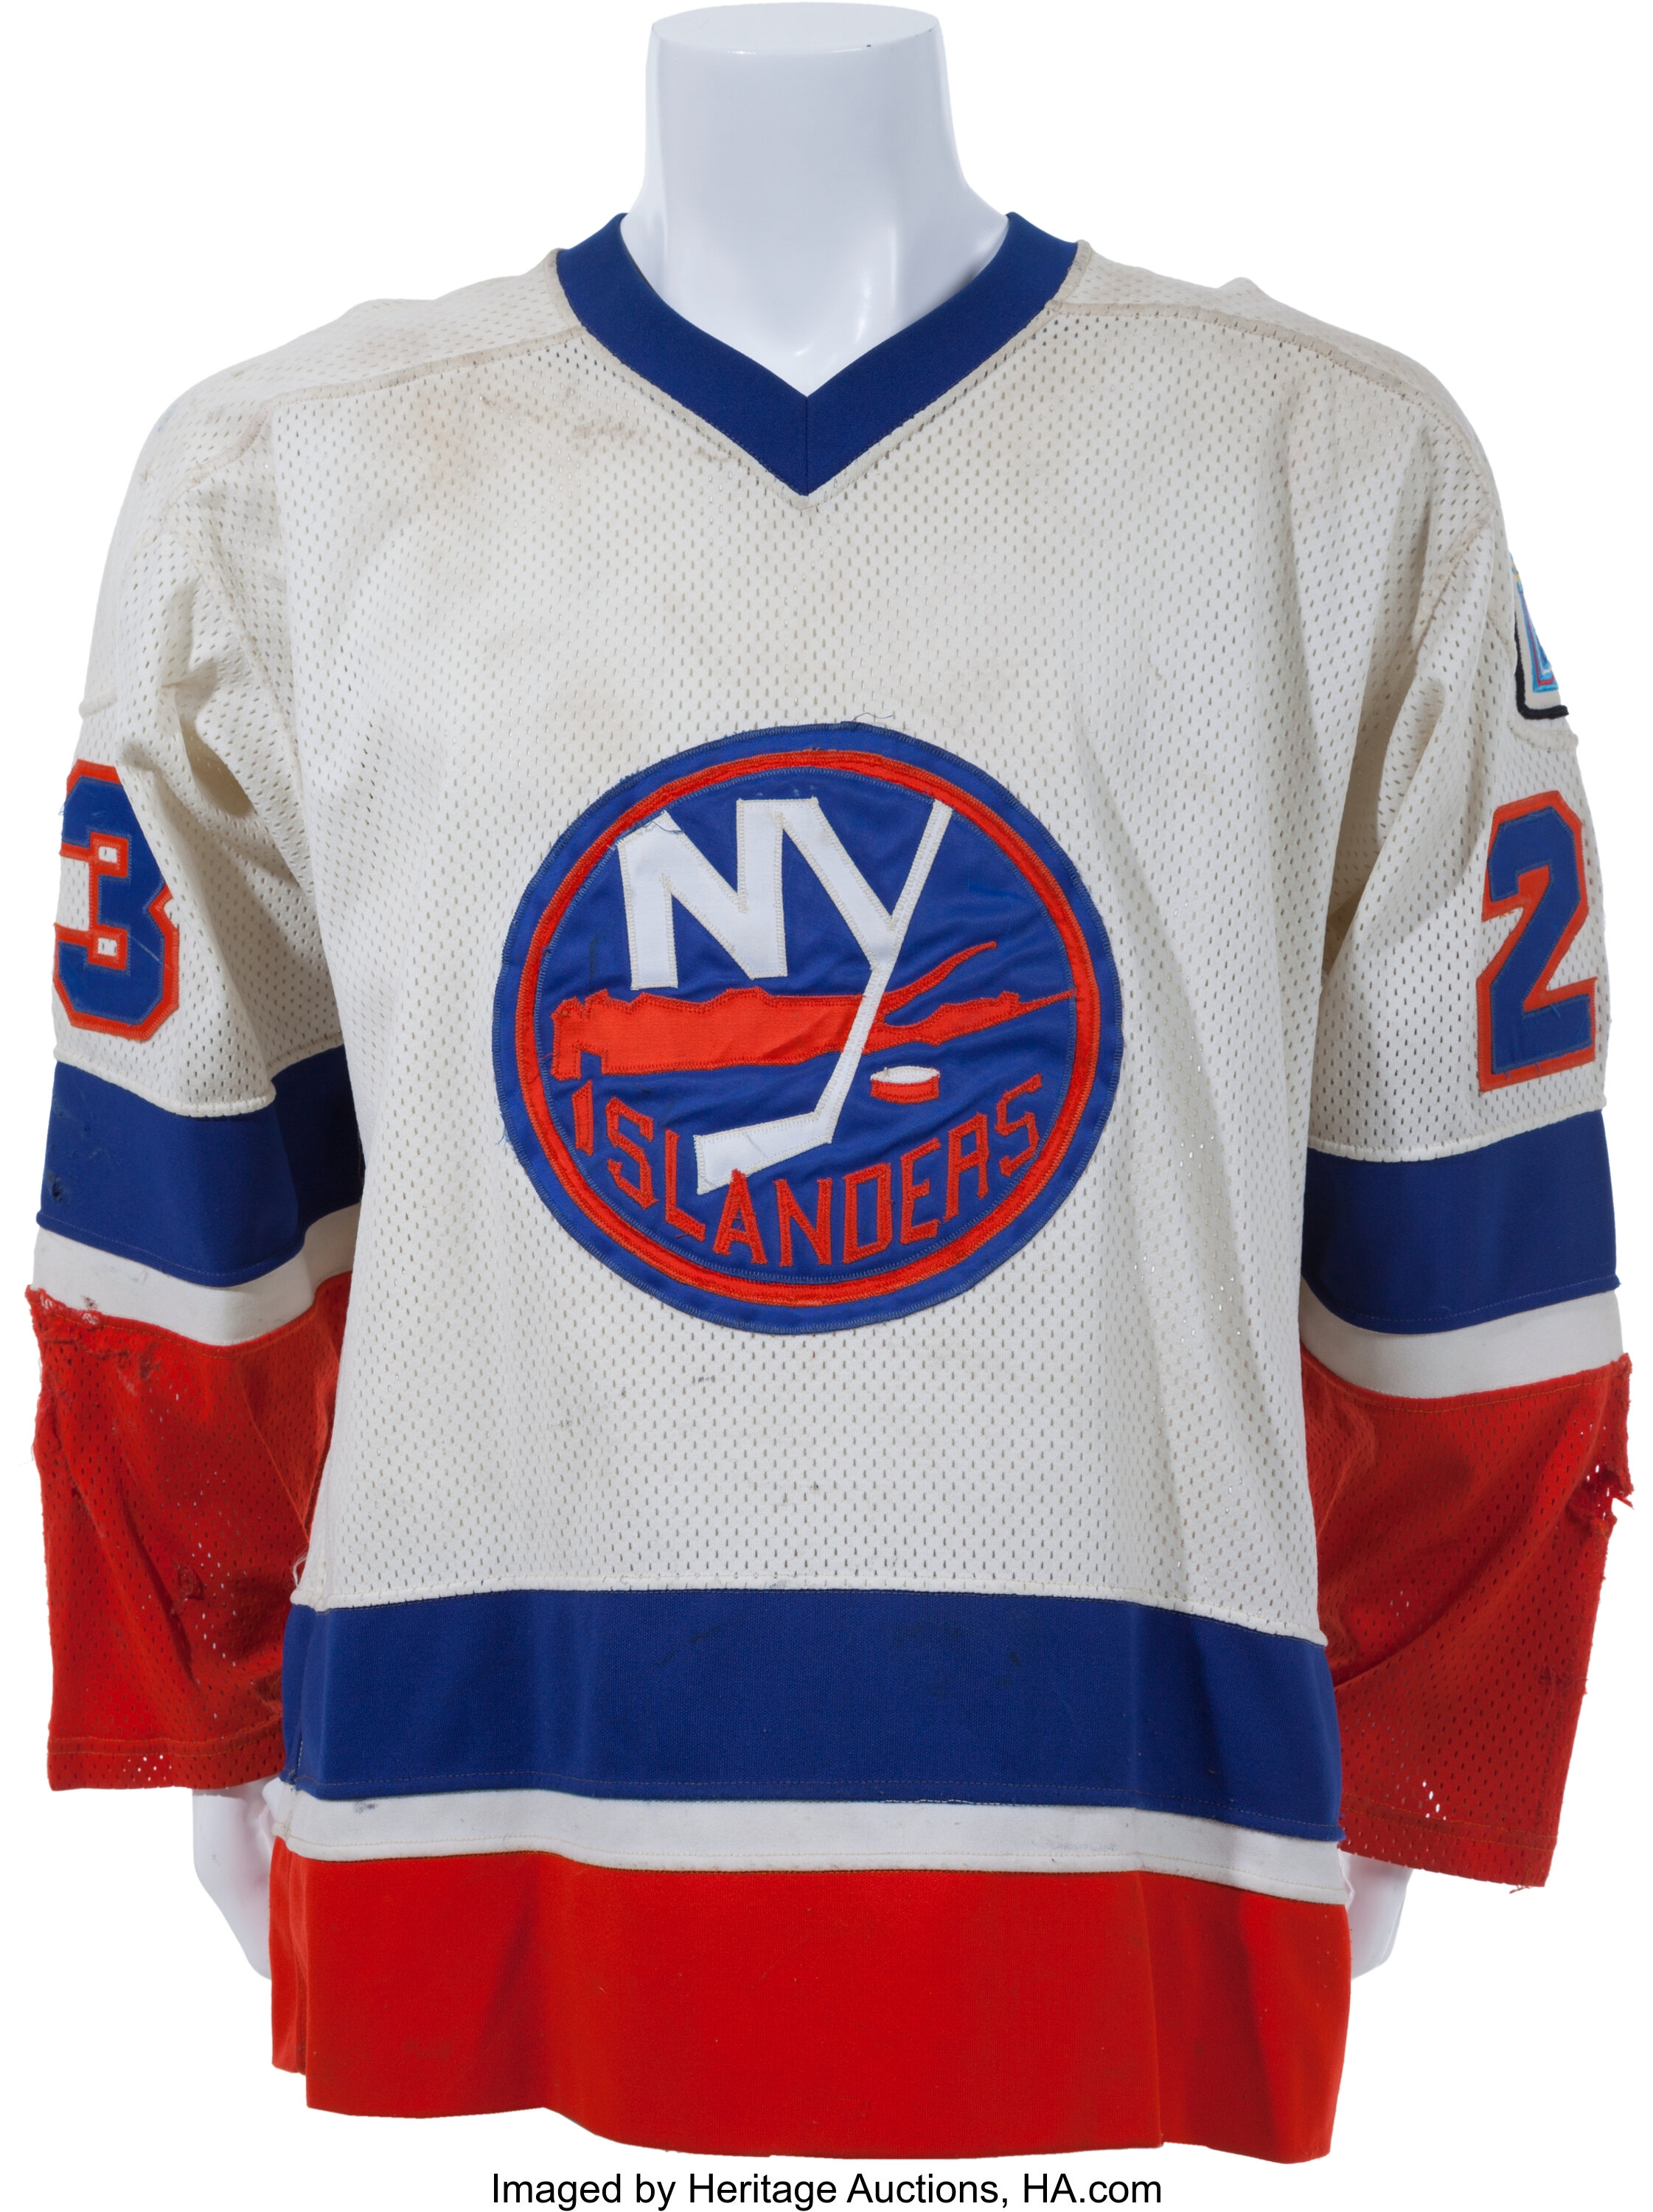 Bob Nystrom Jersey, Bob Nystrom Authentic Breakaway Islanders Jerseys - New  York Store